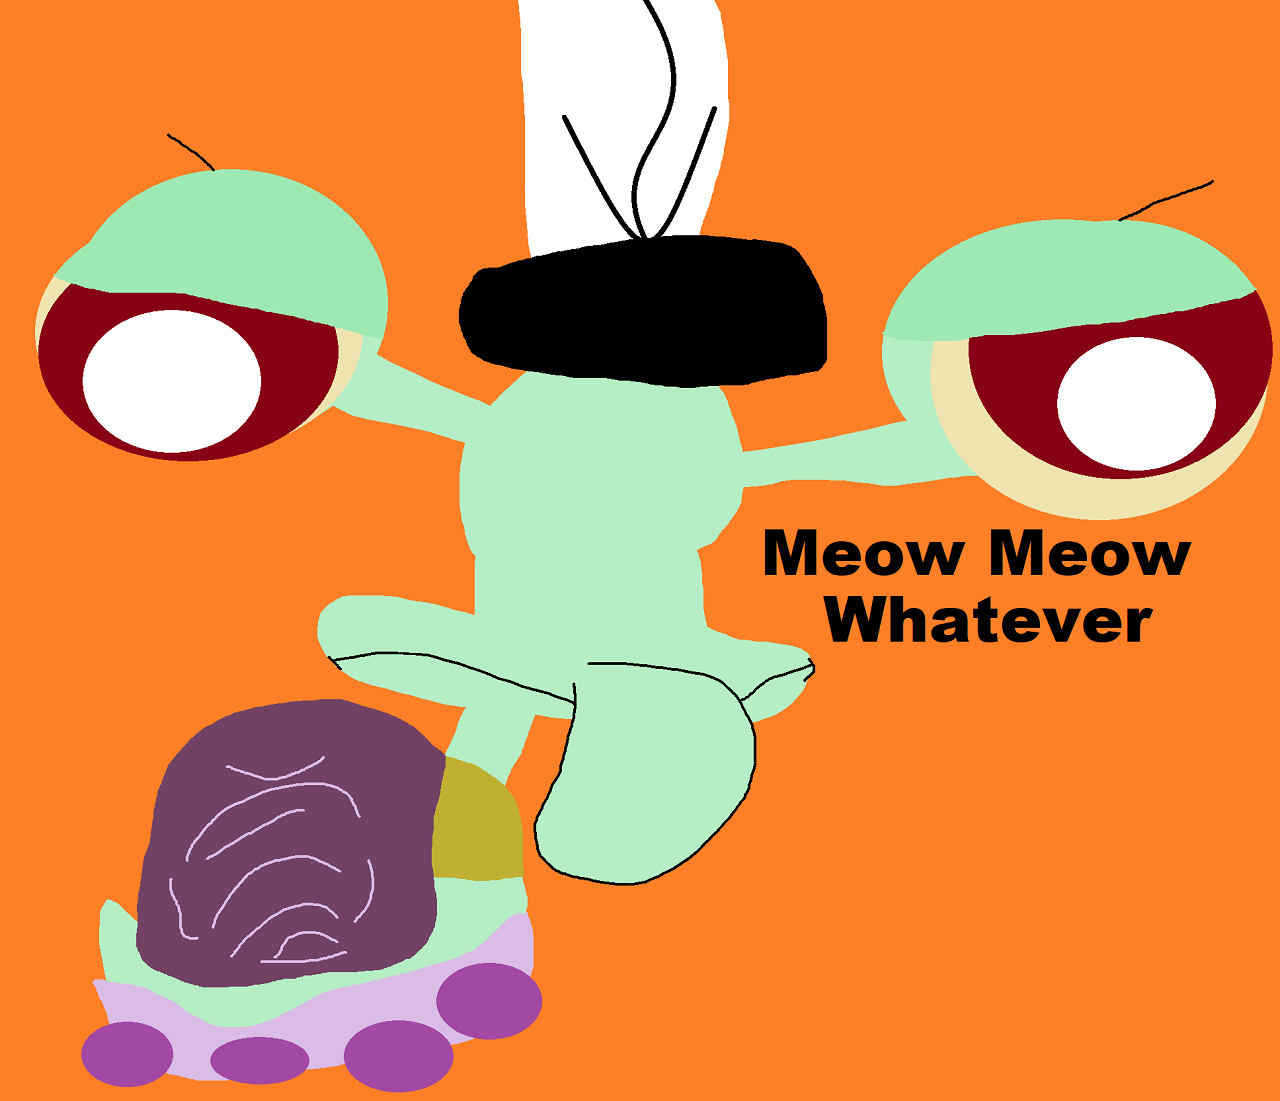 Meow Meow Whatever by Falconlobo